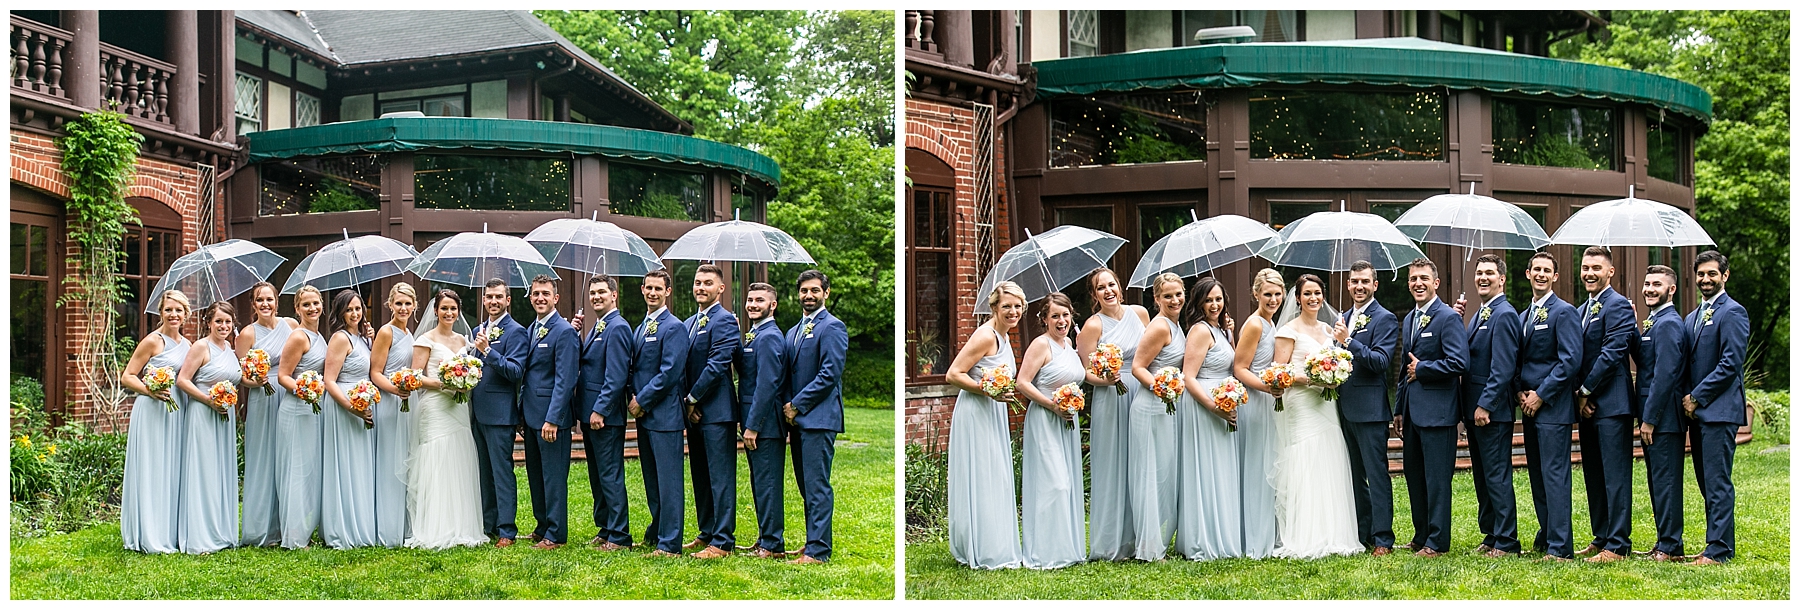 Ashley + Kevin Gramercy Mansion Rainy Day Baltimore Wedding Living Radiant Photography photos_0056.jpg